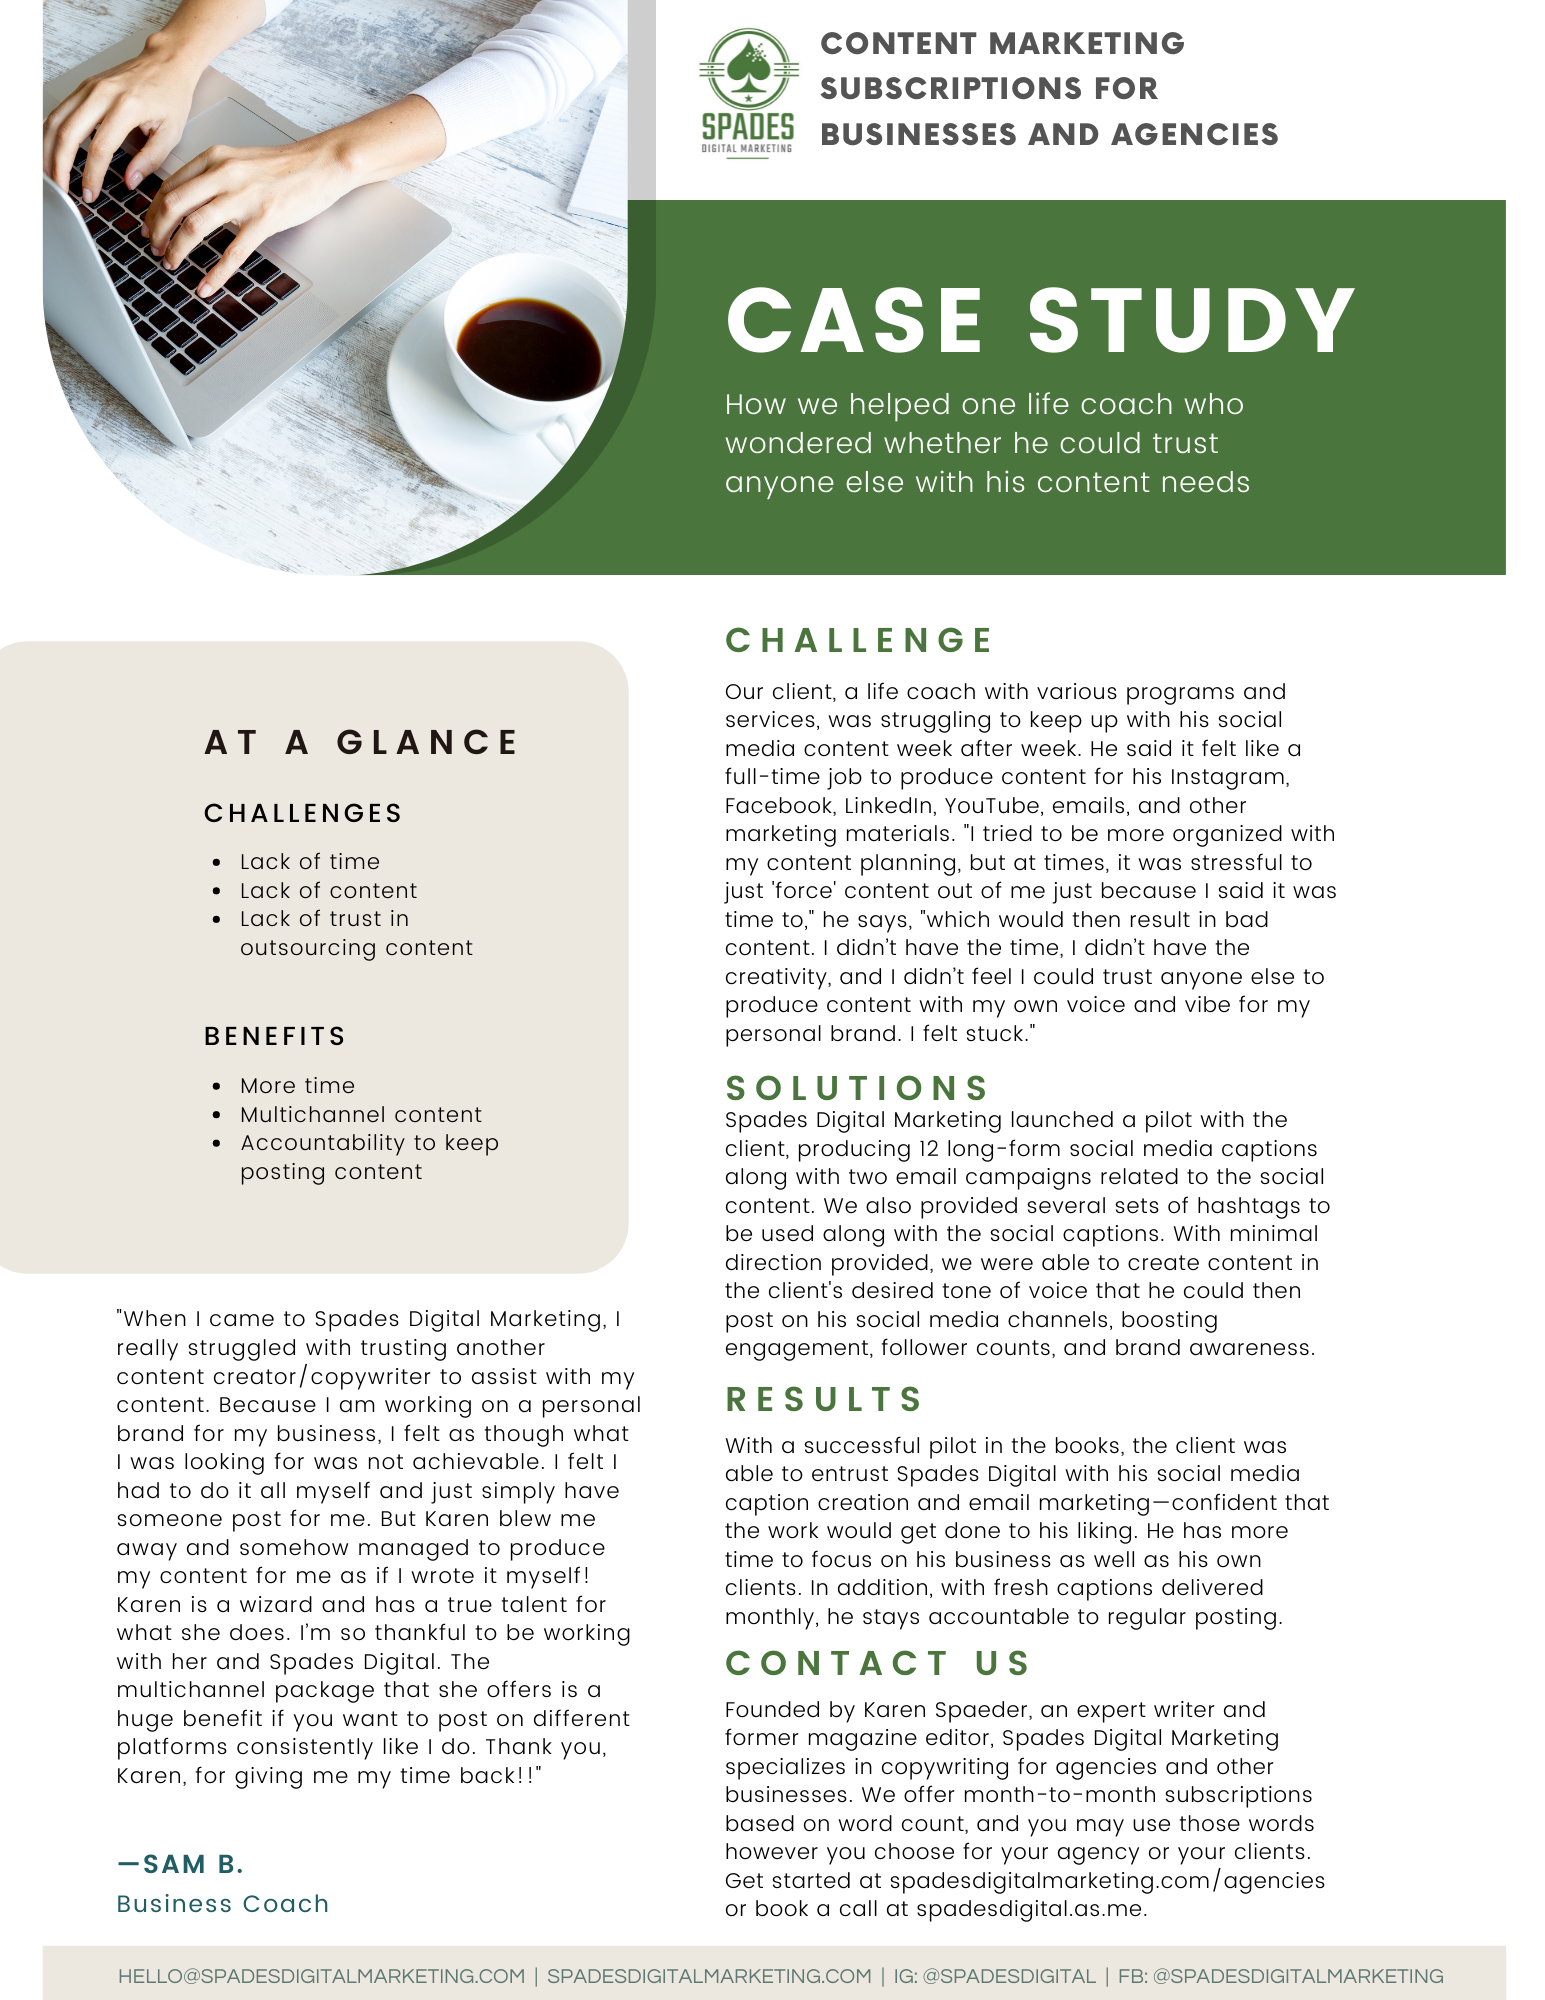 social media email case study